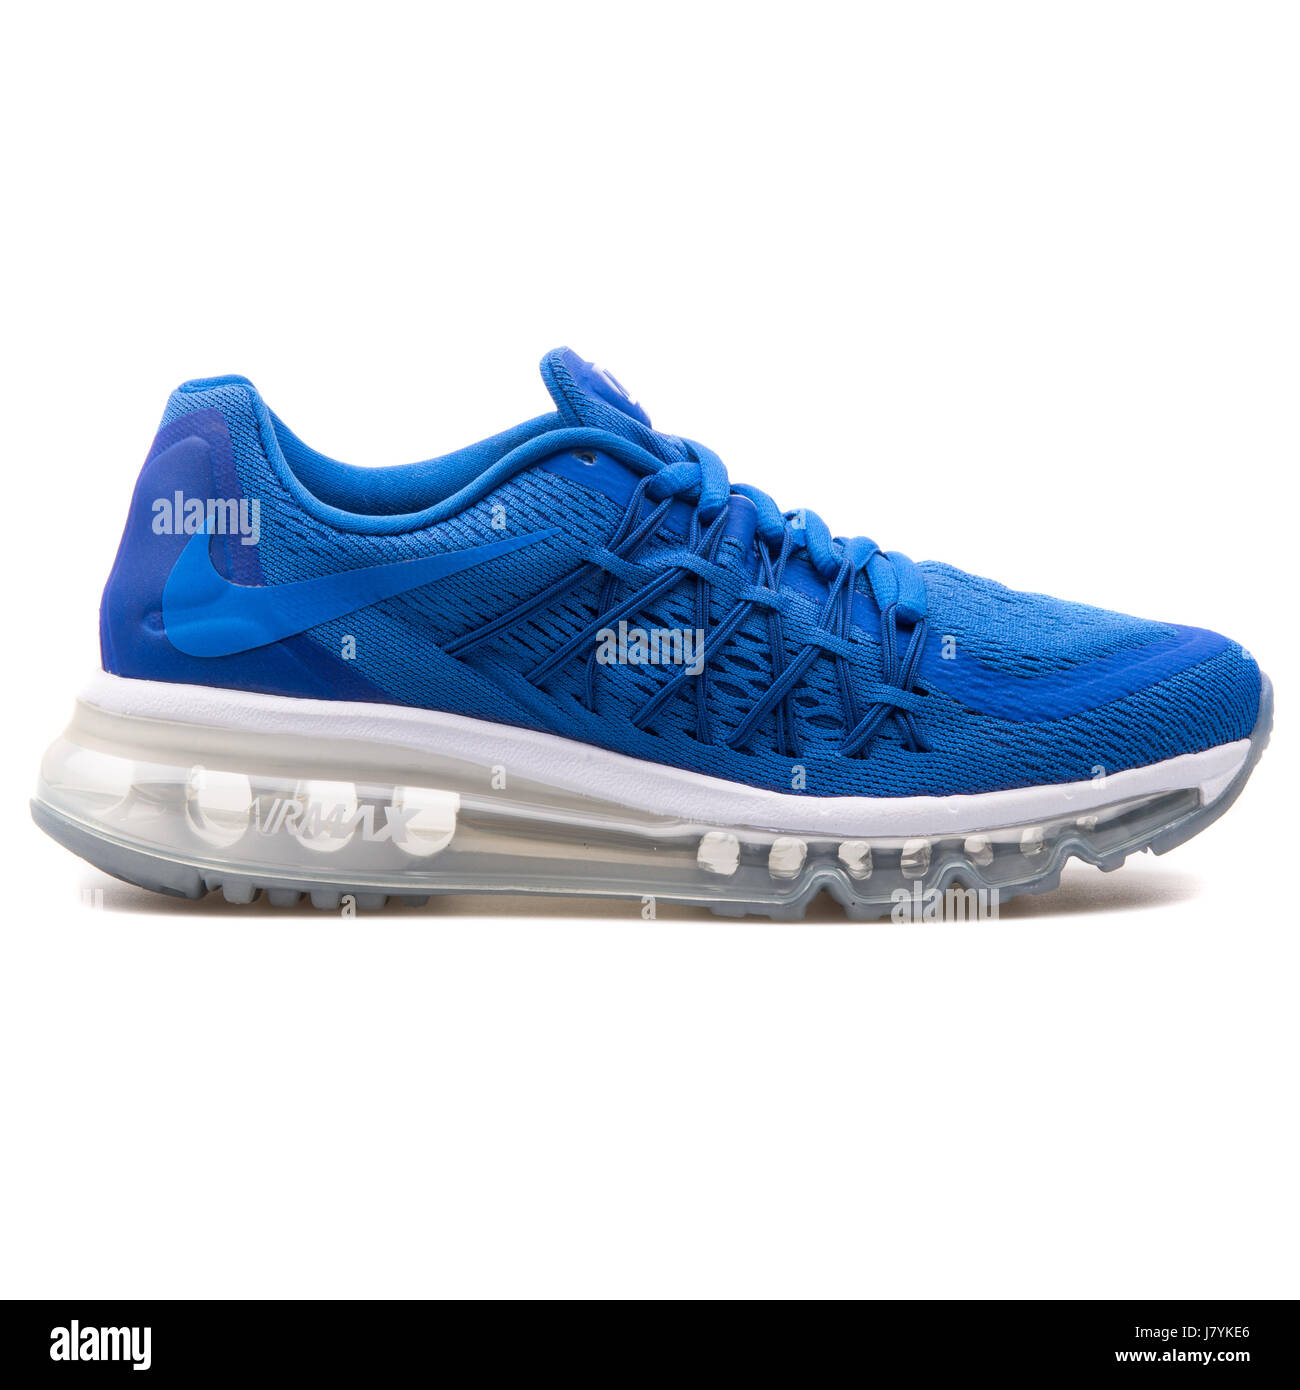 Nike Air Max 2015 (GS) Jugend blau Running Sneaker - 705457-402  Stockfotografie - Alamy